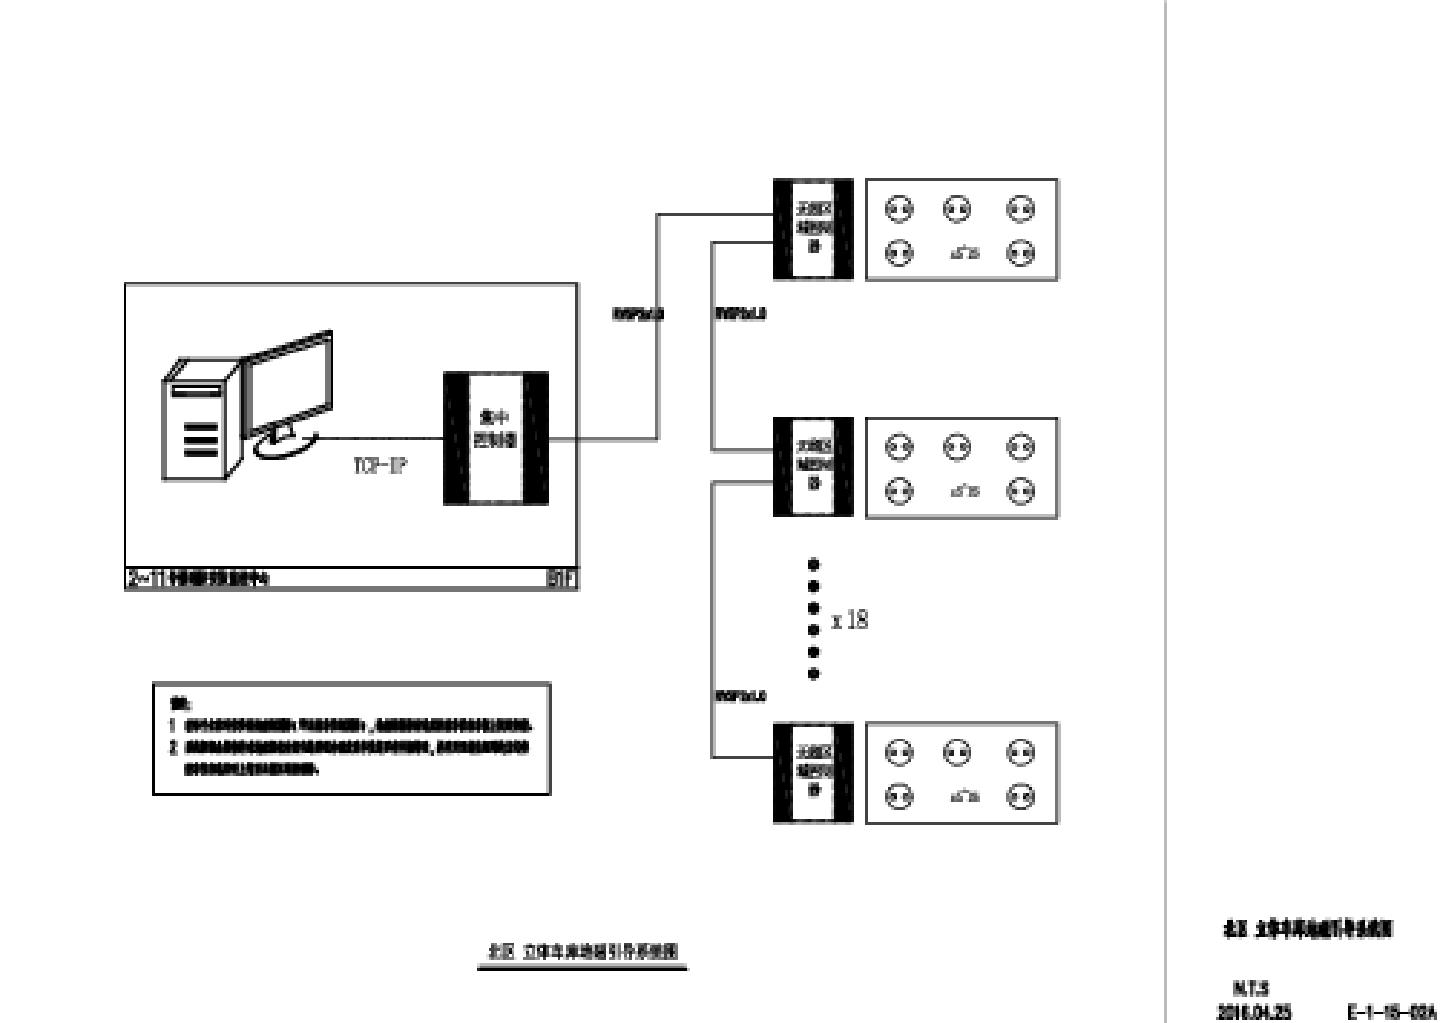 E-1-15-02A 北区立体车库地磁引导系统CAD图.dwg